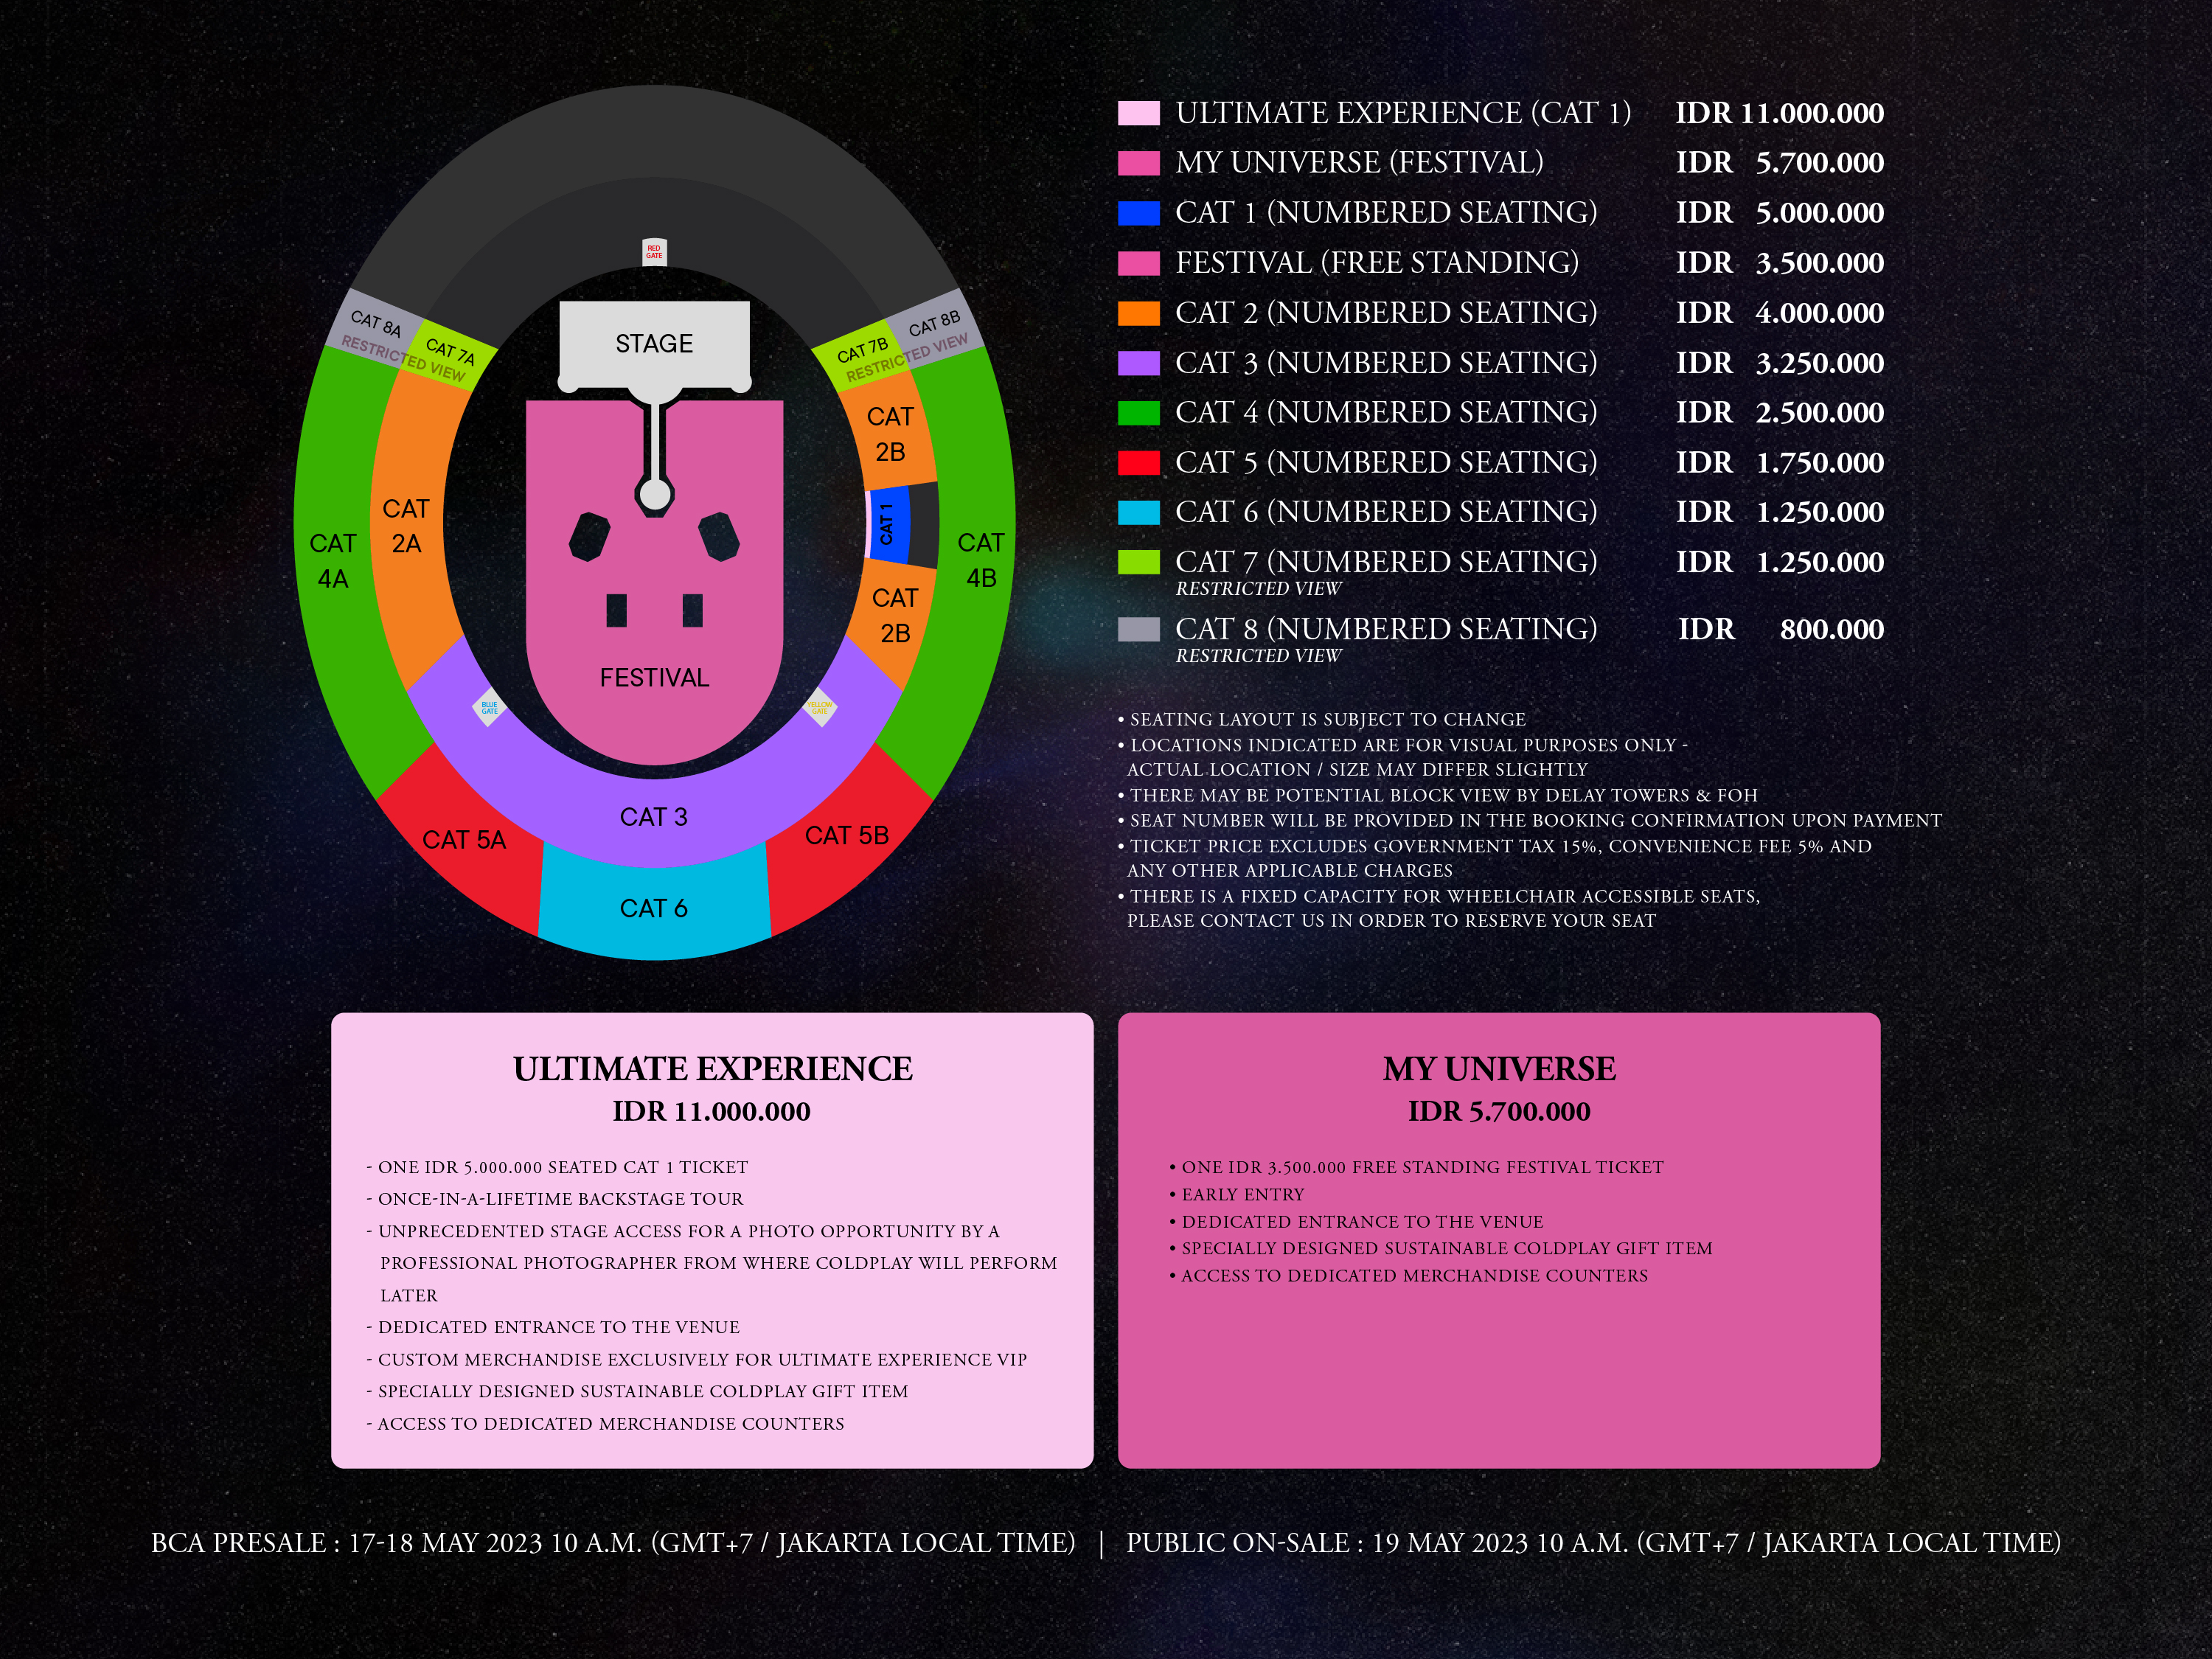 Harga & Seat Plan Konser Coldplay di Jakarta (Sumber gambar: coldplayinjakarta.com)